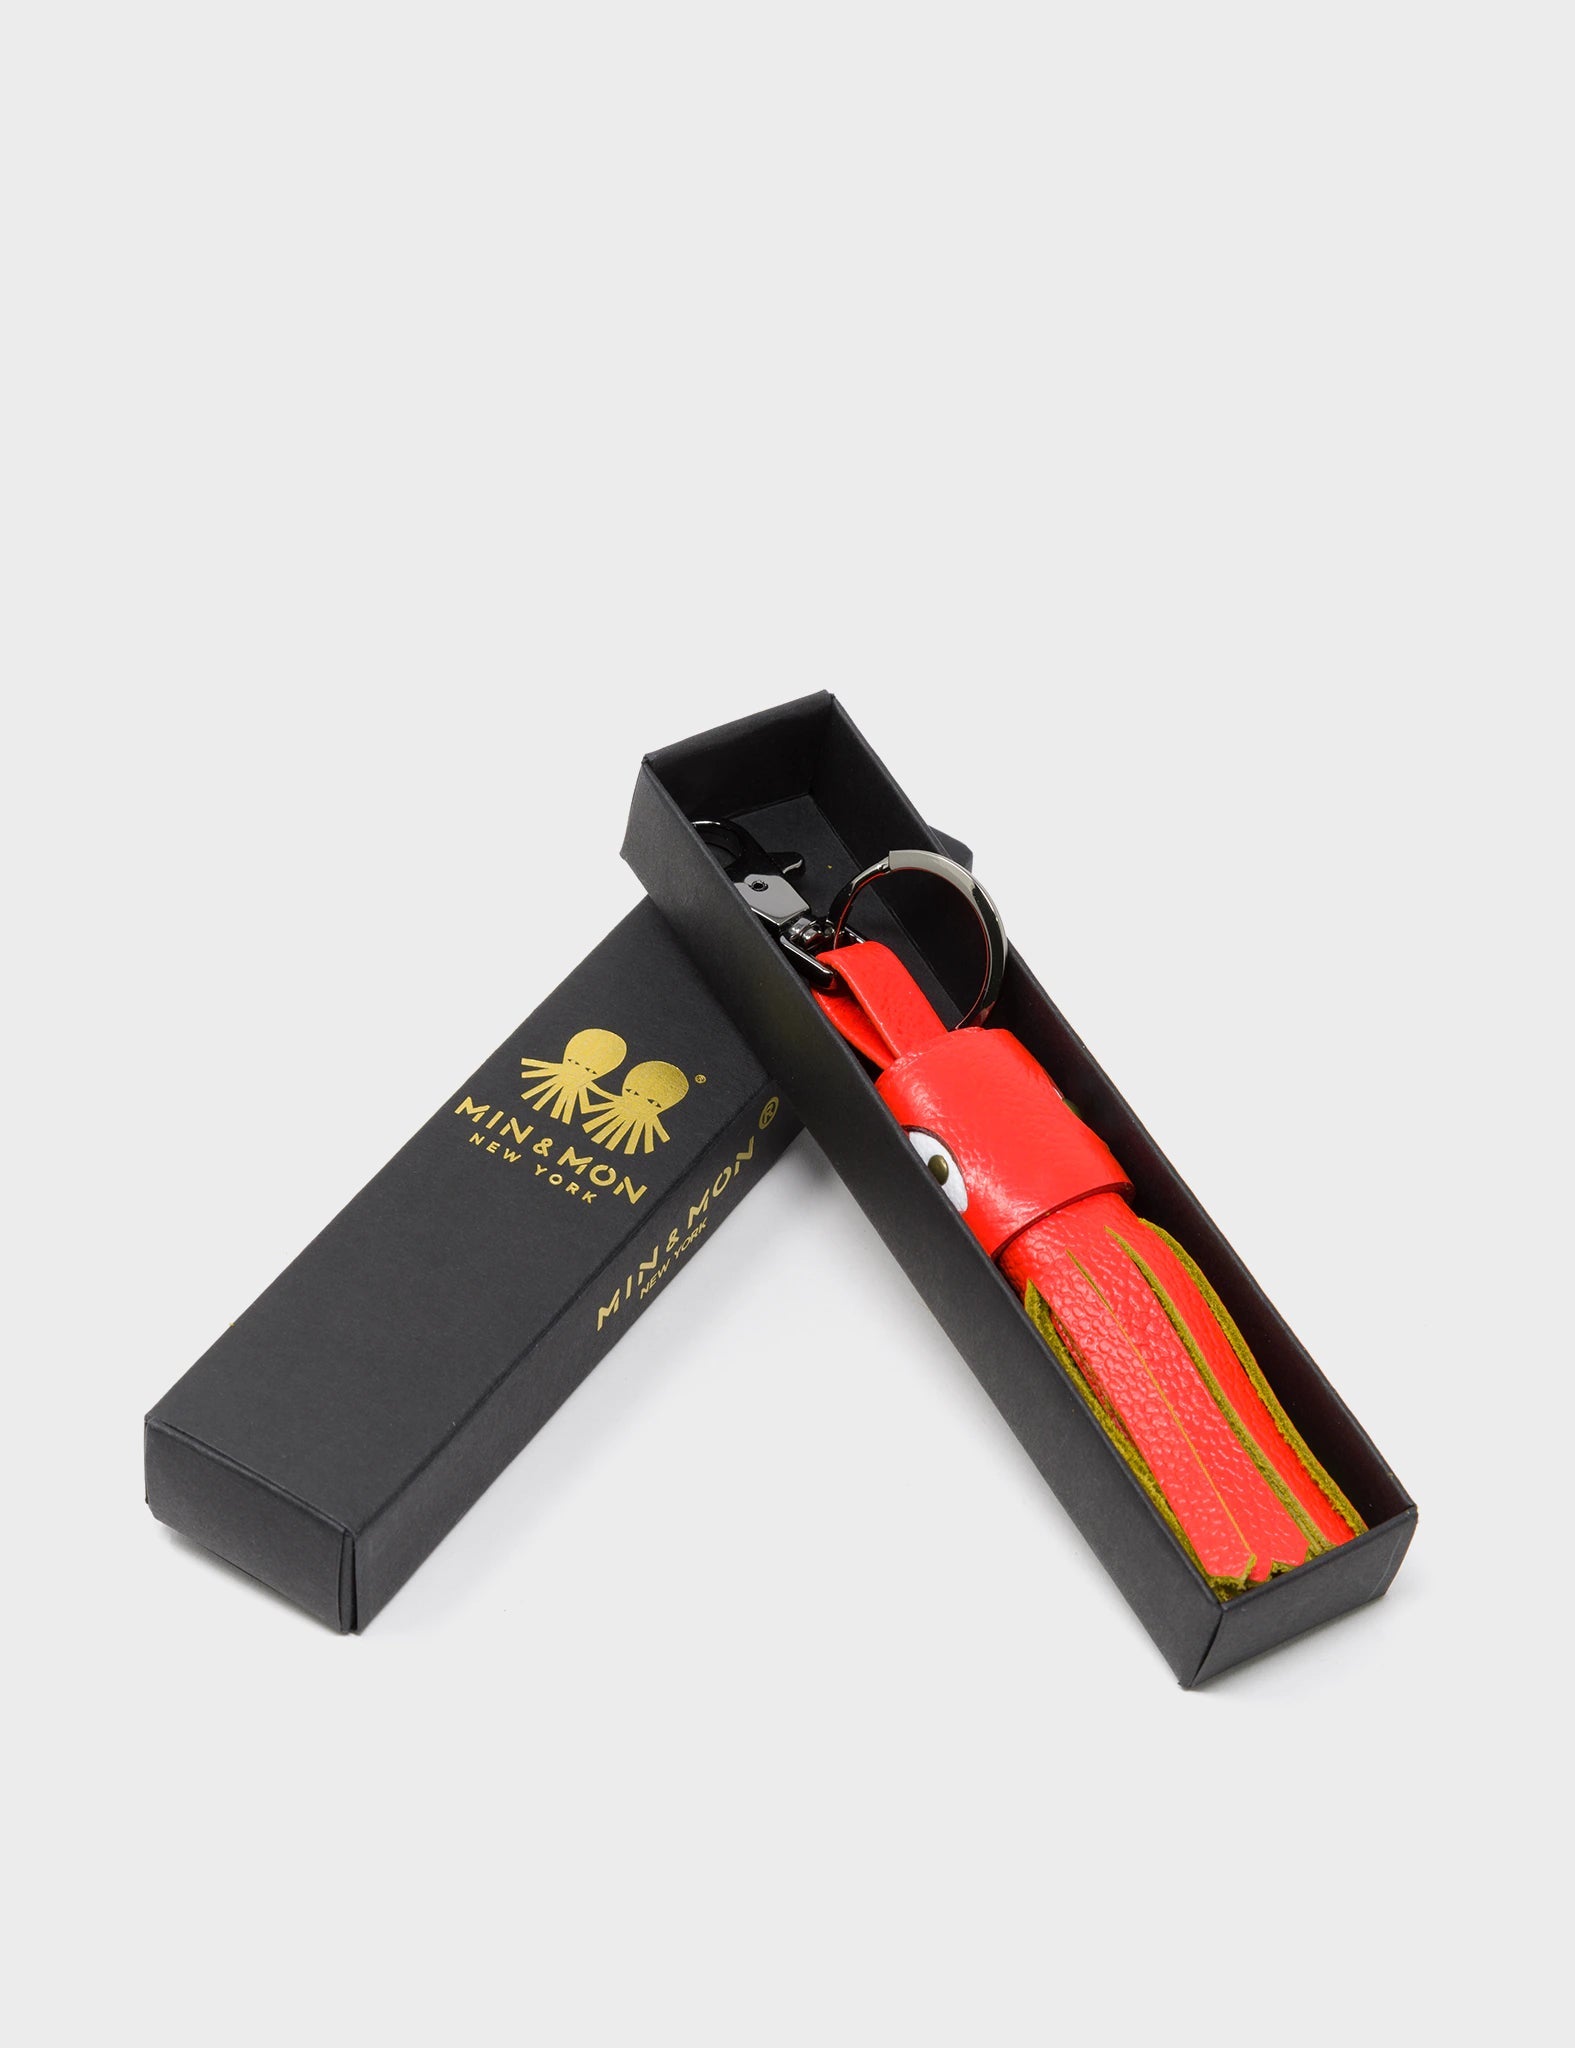 Tassel Squid Callie Marie Hue Charm - Fiesta Red Leather Keychain - Package 